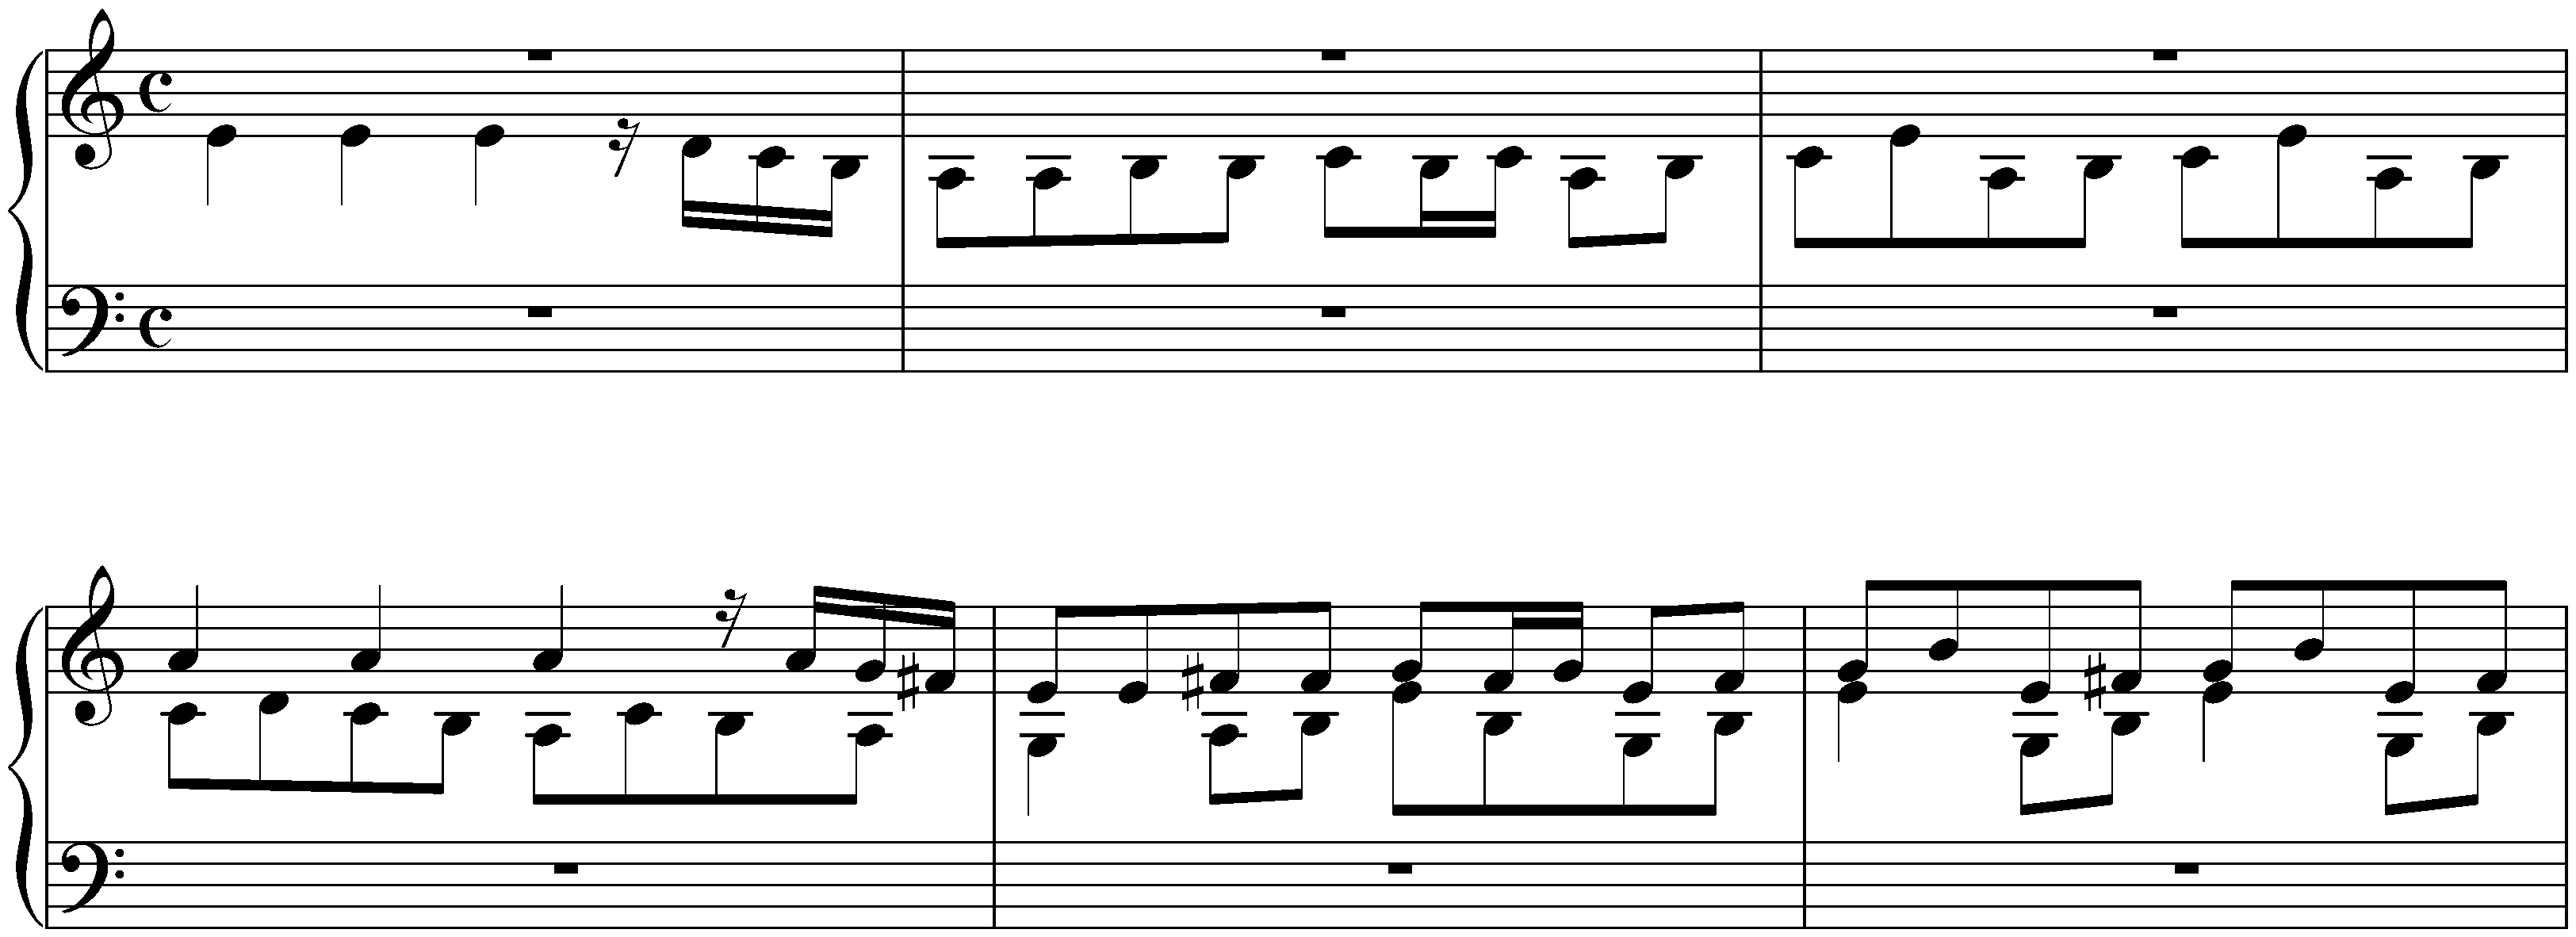 Fugue in A minor, BWV 958